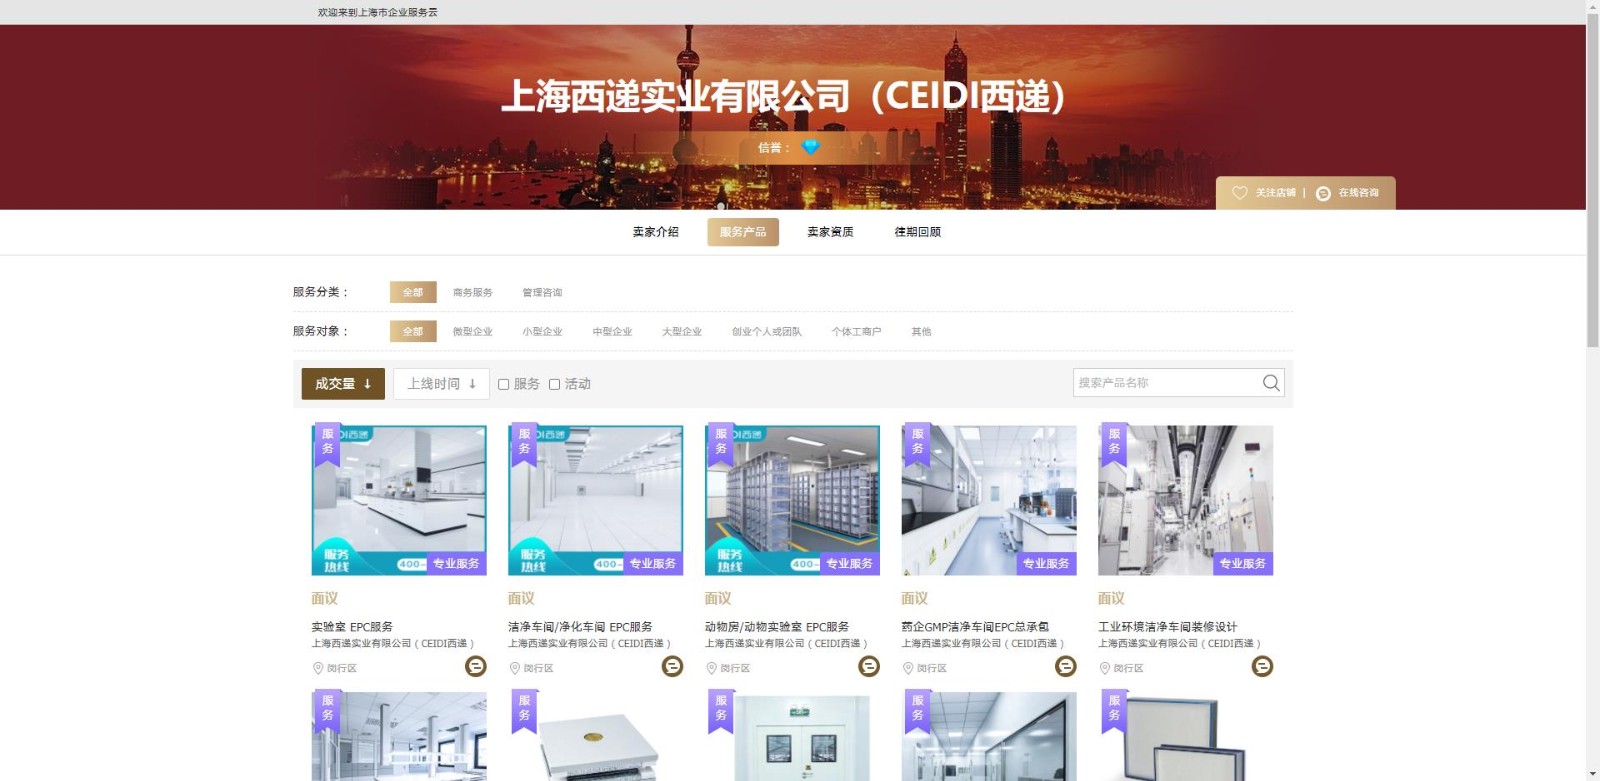 CEIDI西递上海市企业服务云店铺正式开设运营